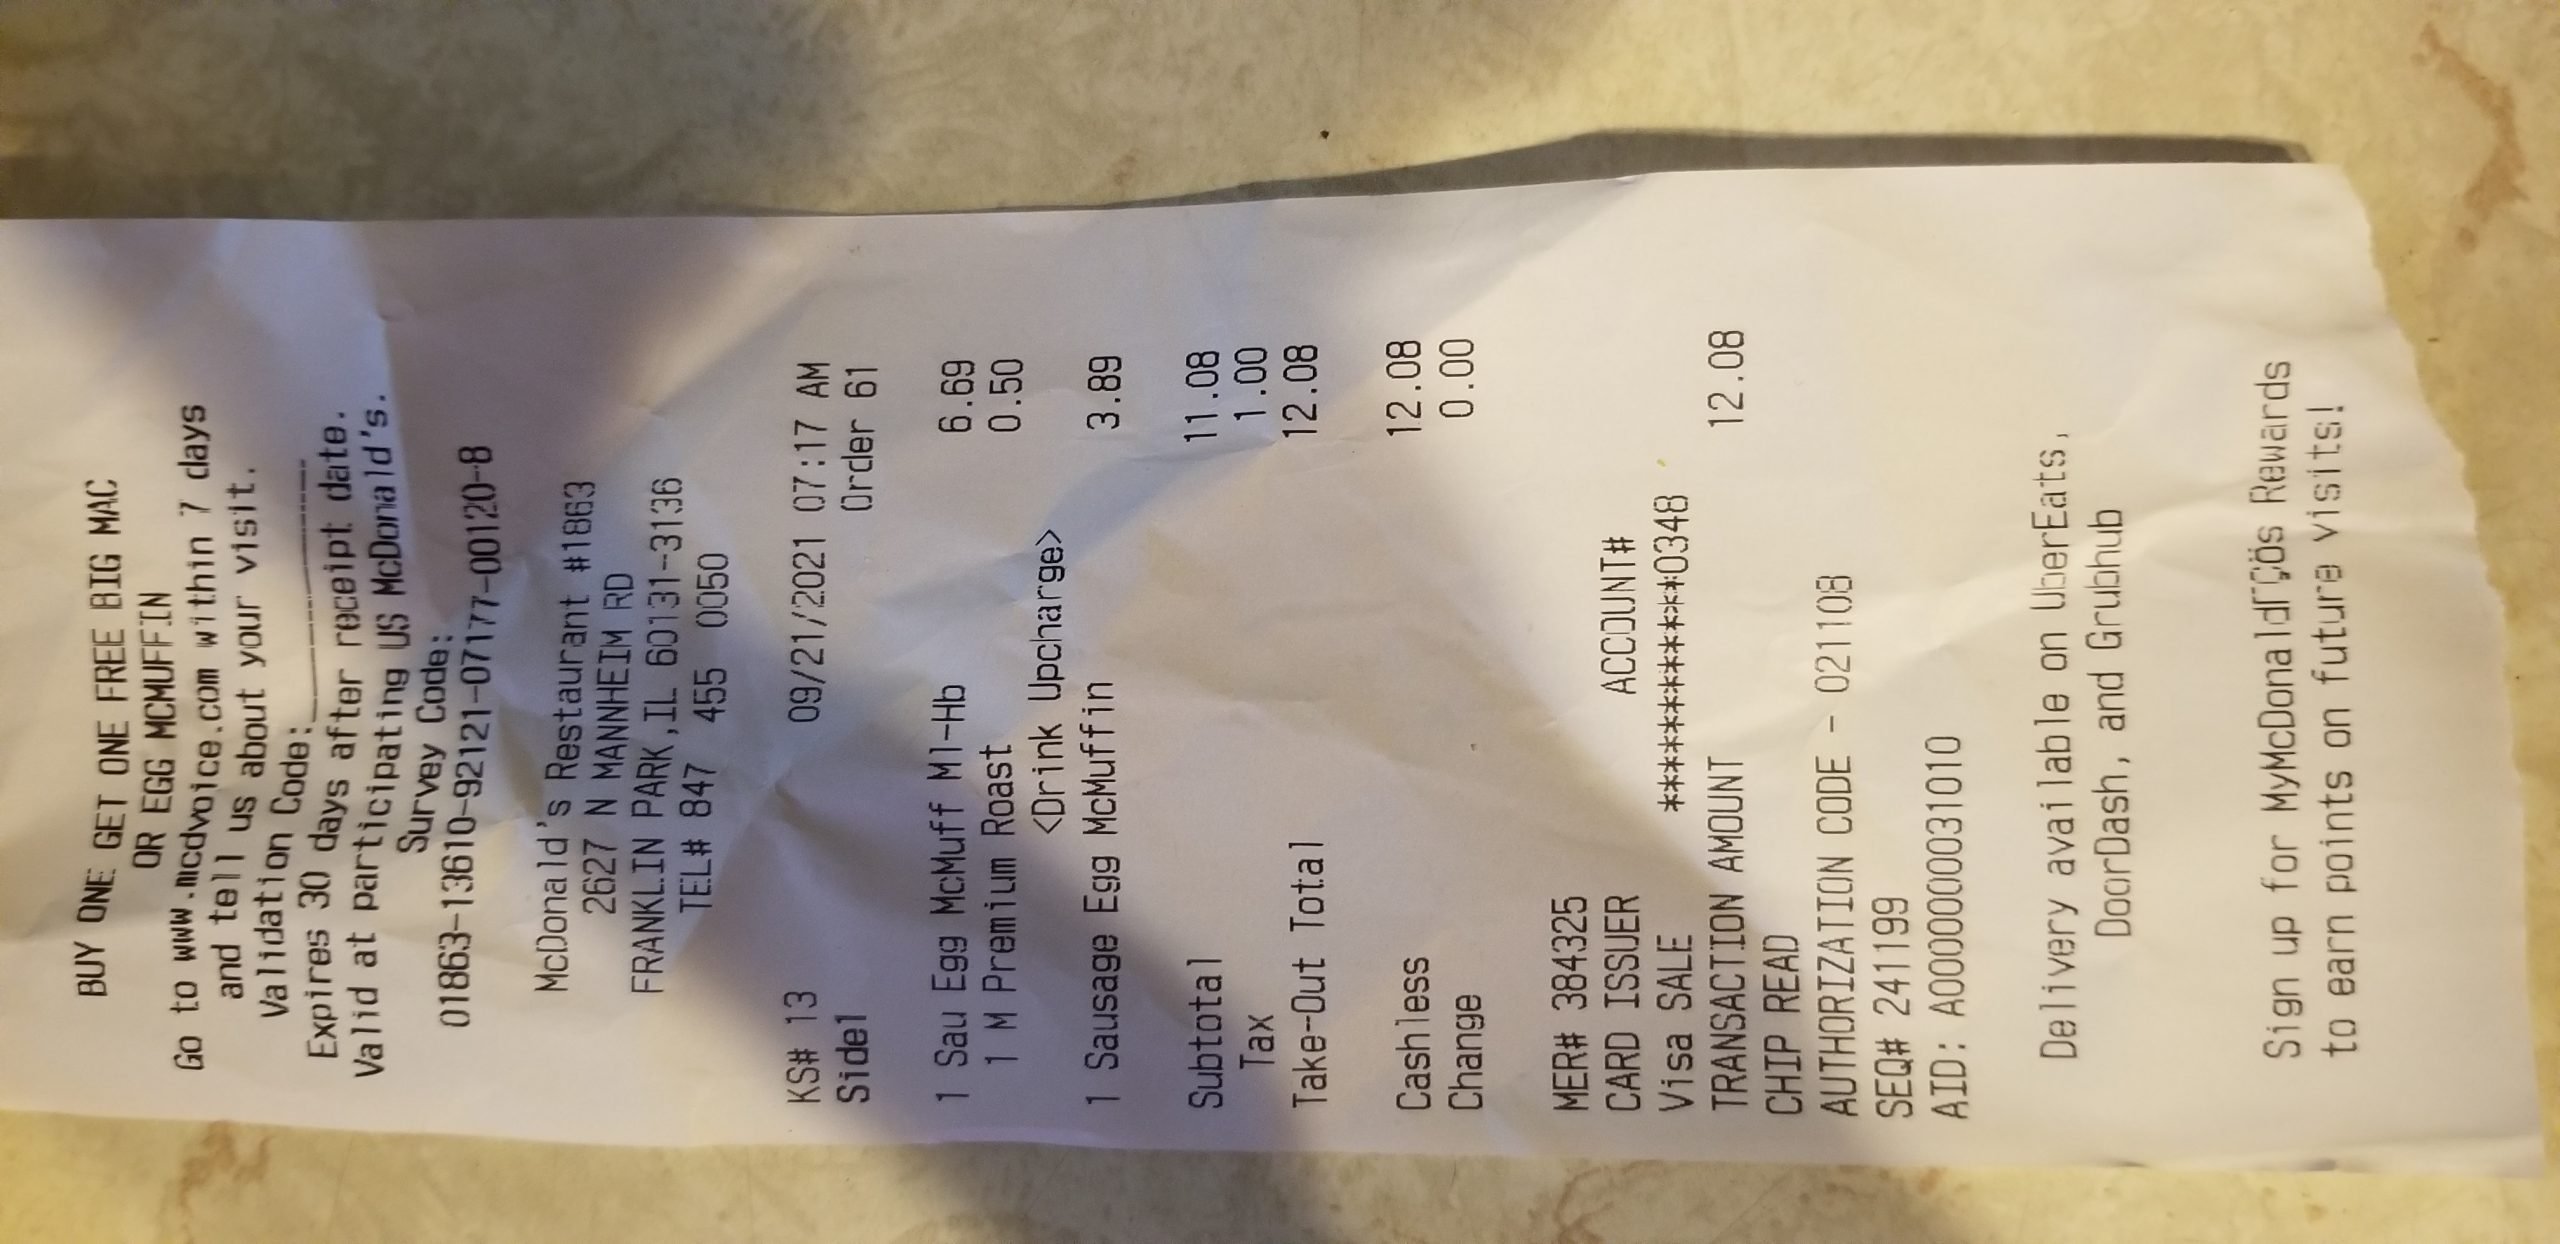 McDonalds complaint Meal deal